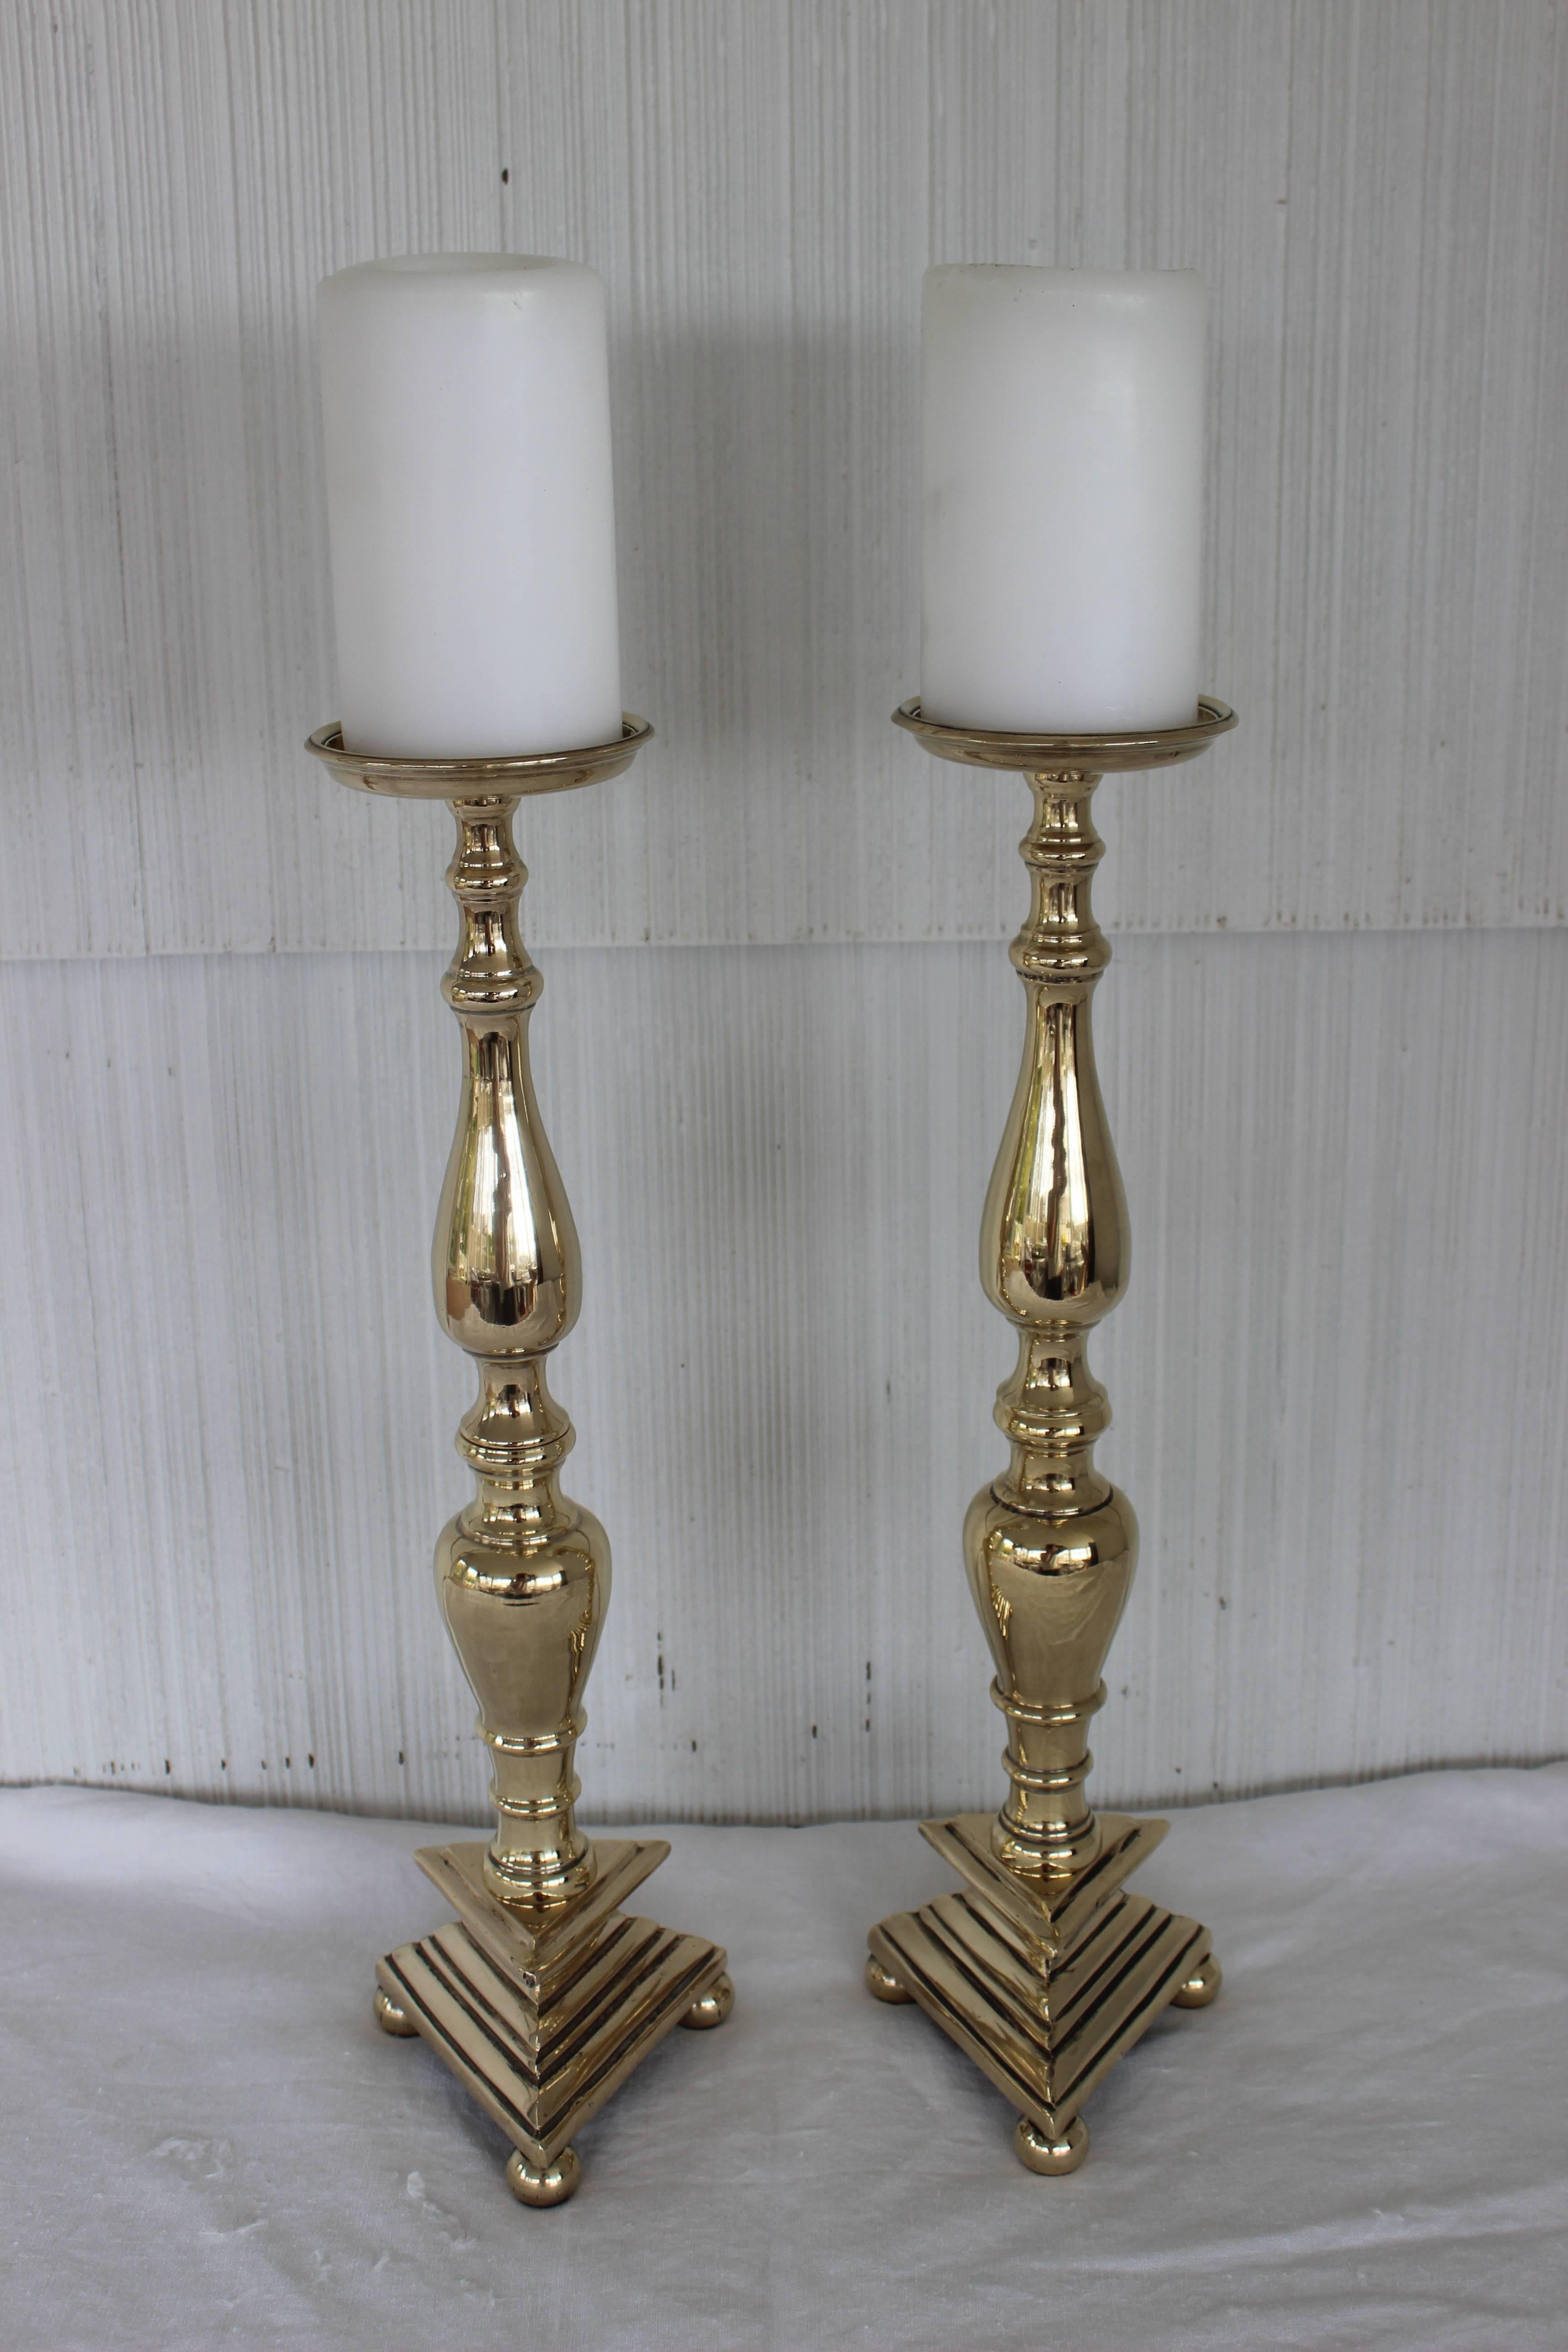 Wonderful pair of polished brass altar candlesticks.